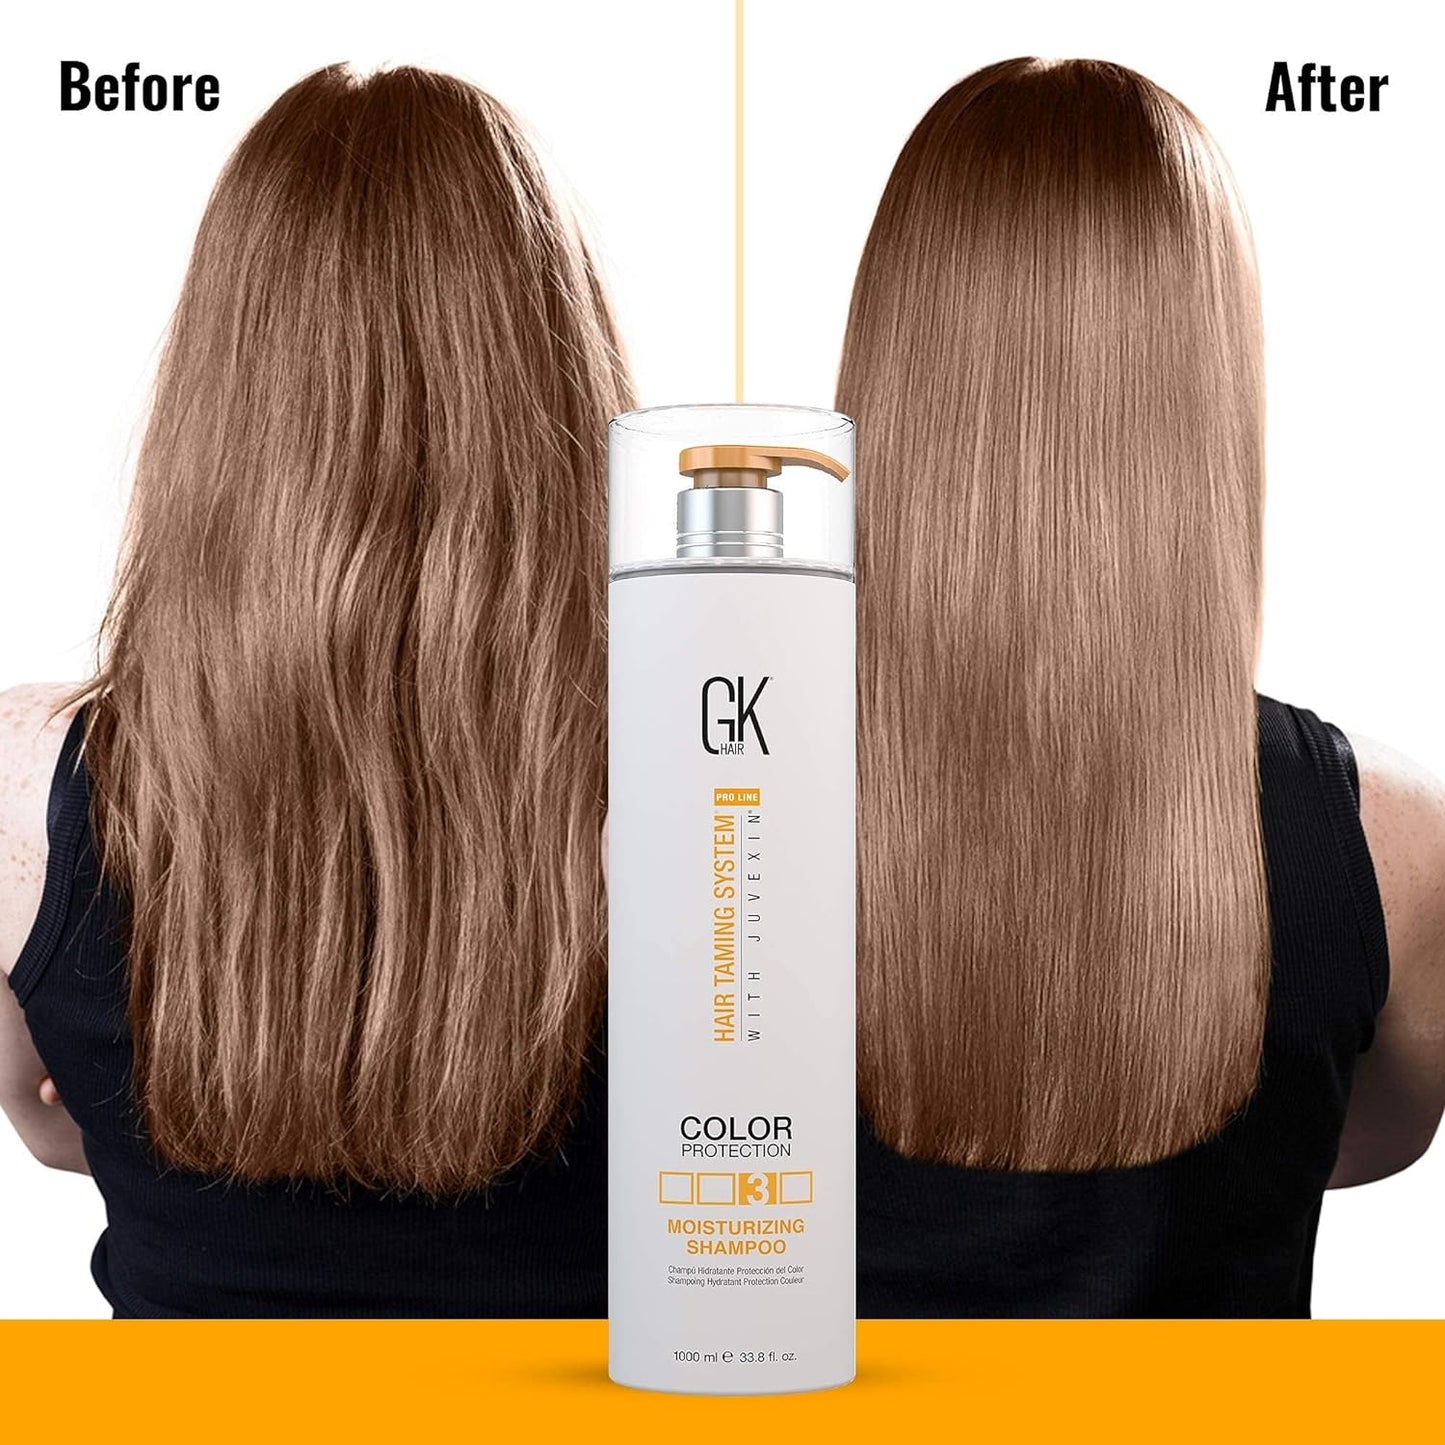 GK color protect hair shampoo 300ml